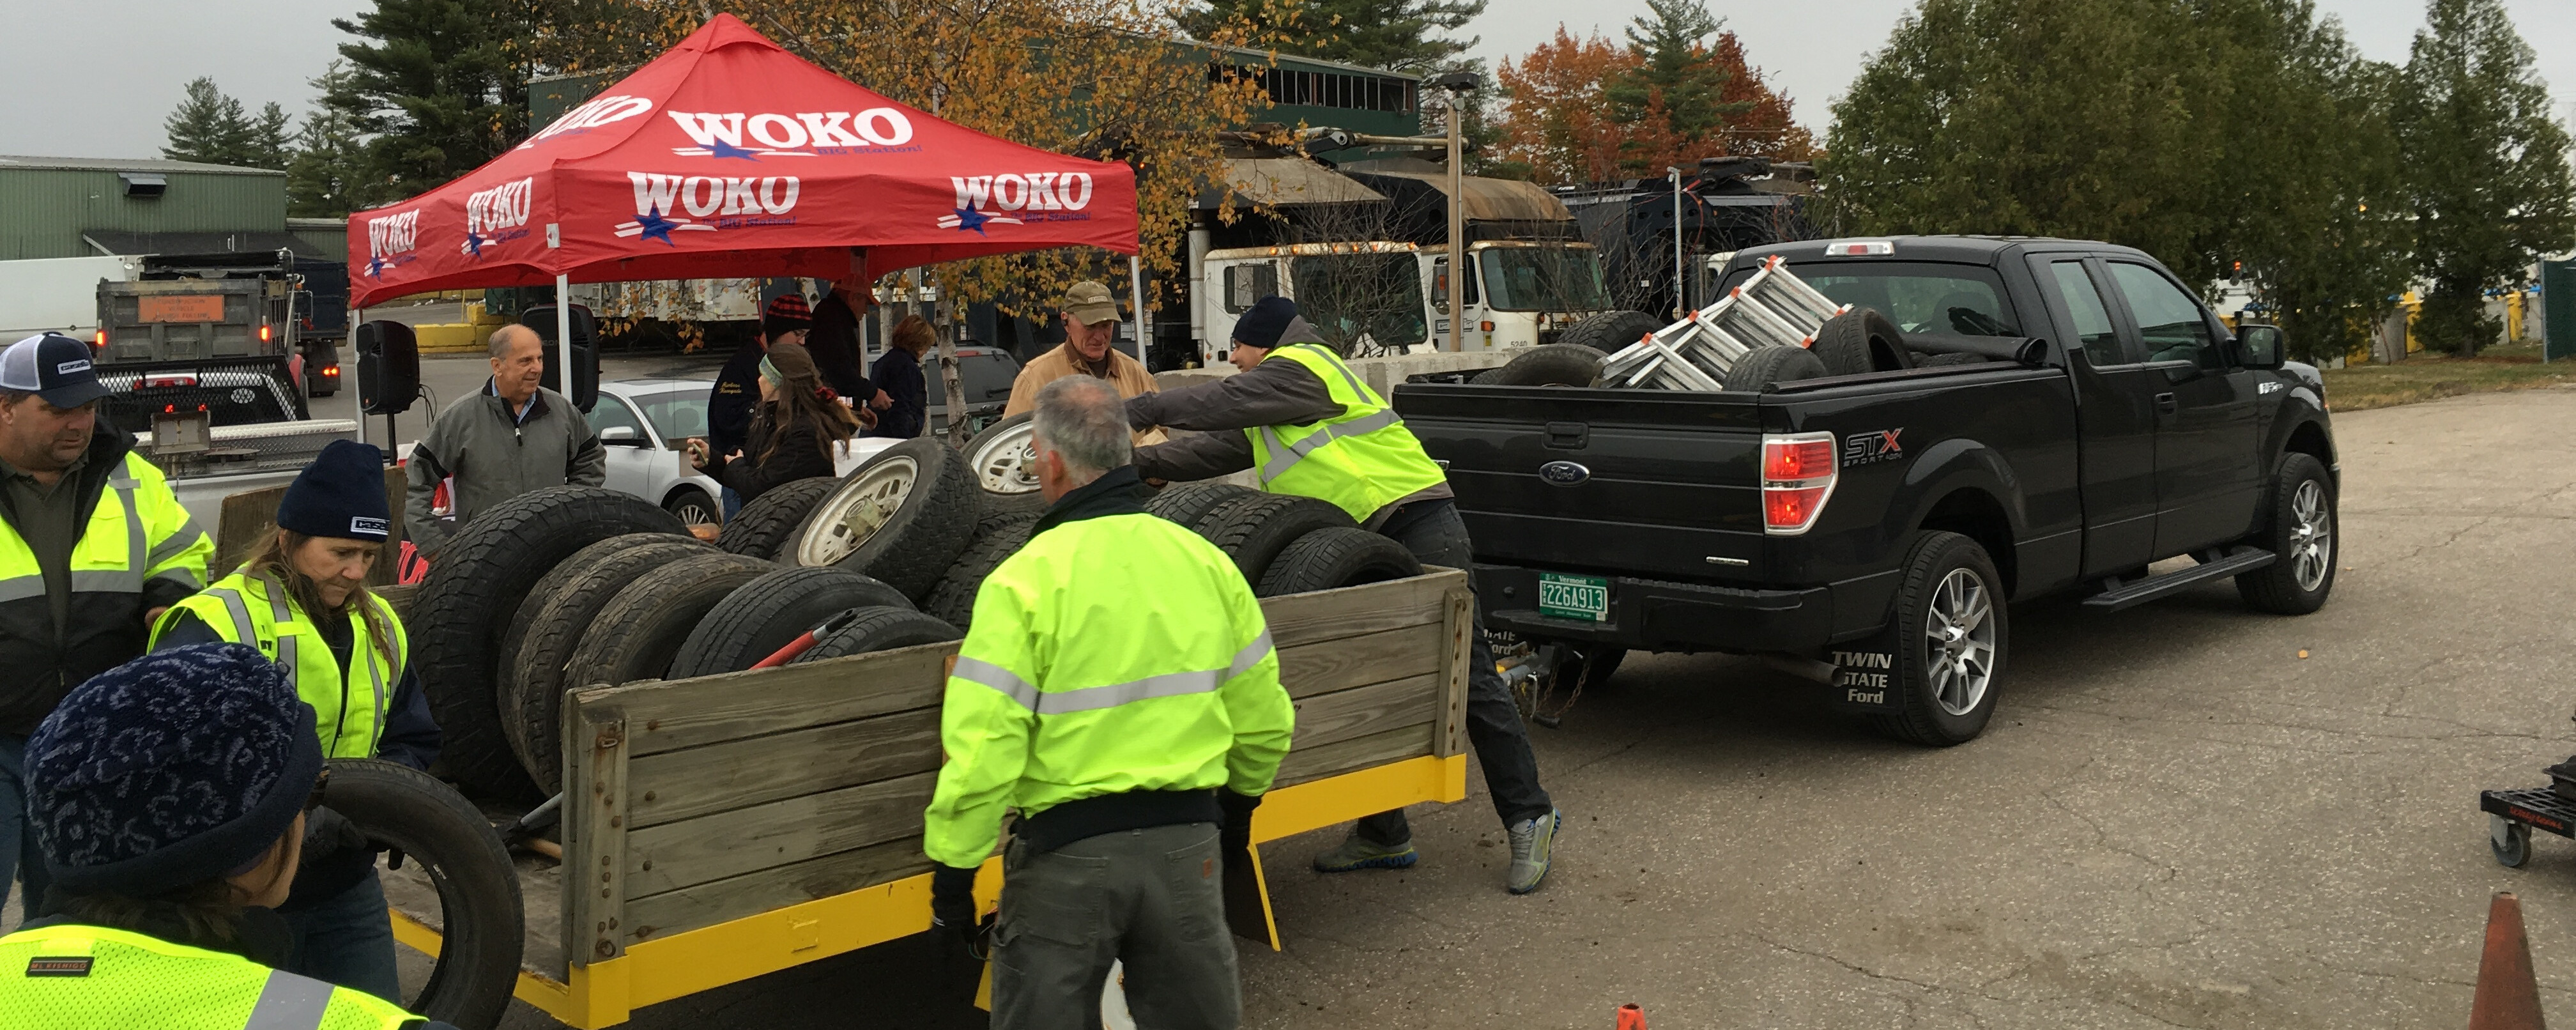 volunteers working around a trailer full of tires